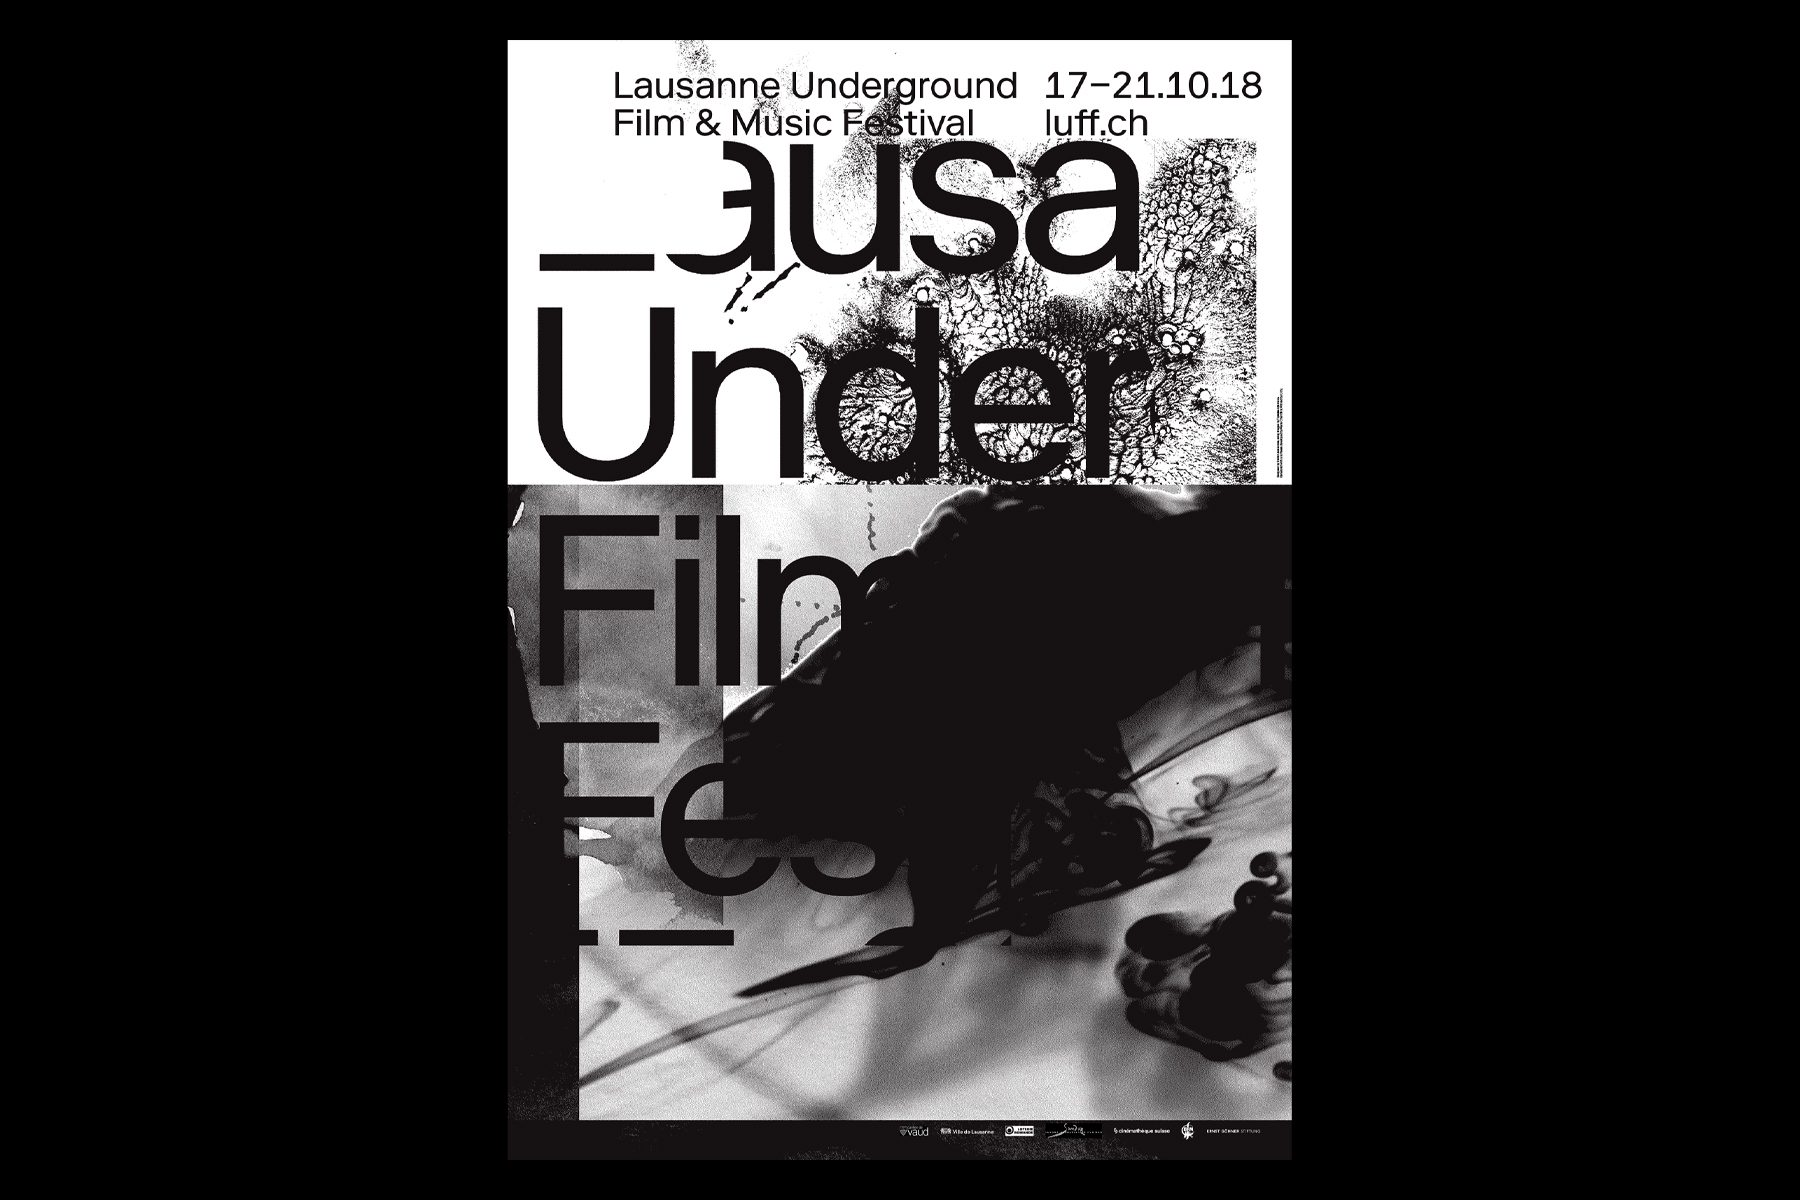 LUFF_Lausanne-Underground-Film-and-Music-Festival_2018_Dimitri-Jeannottat_1800x1200_29